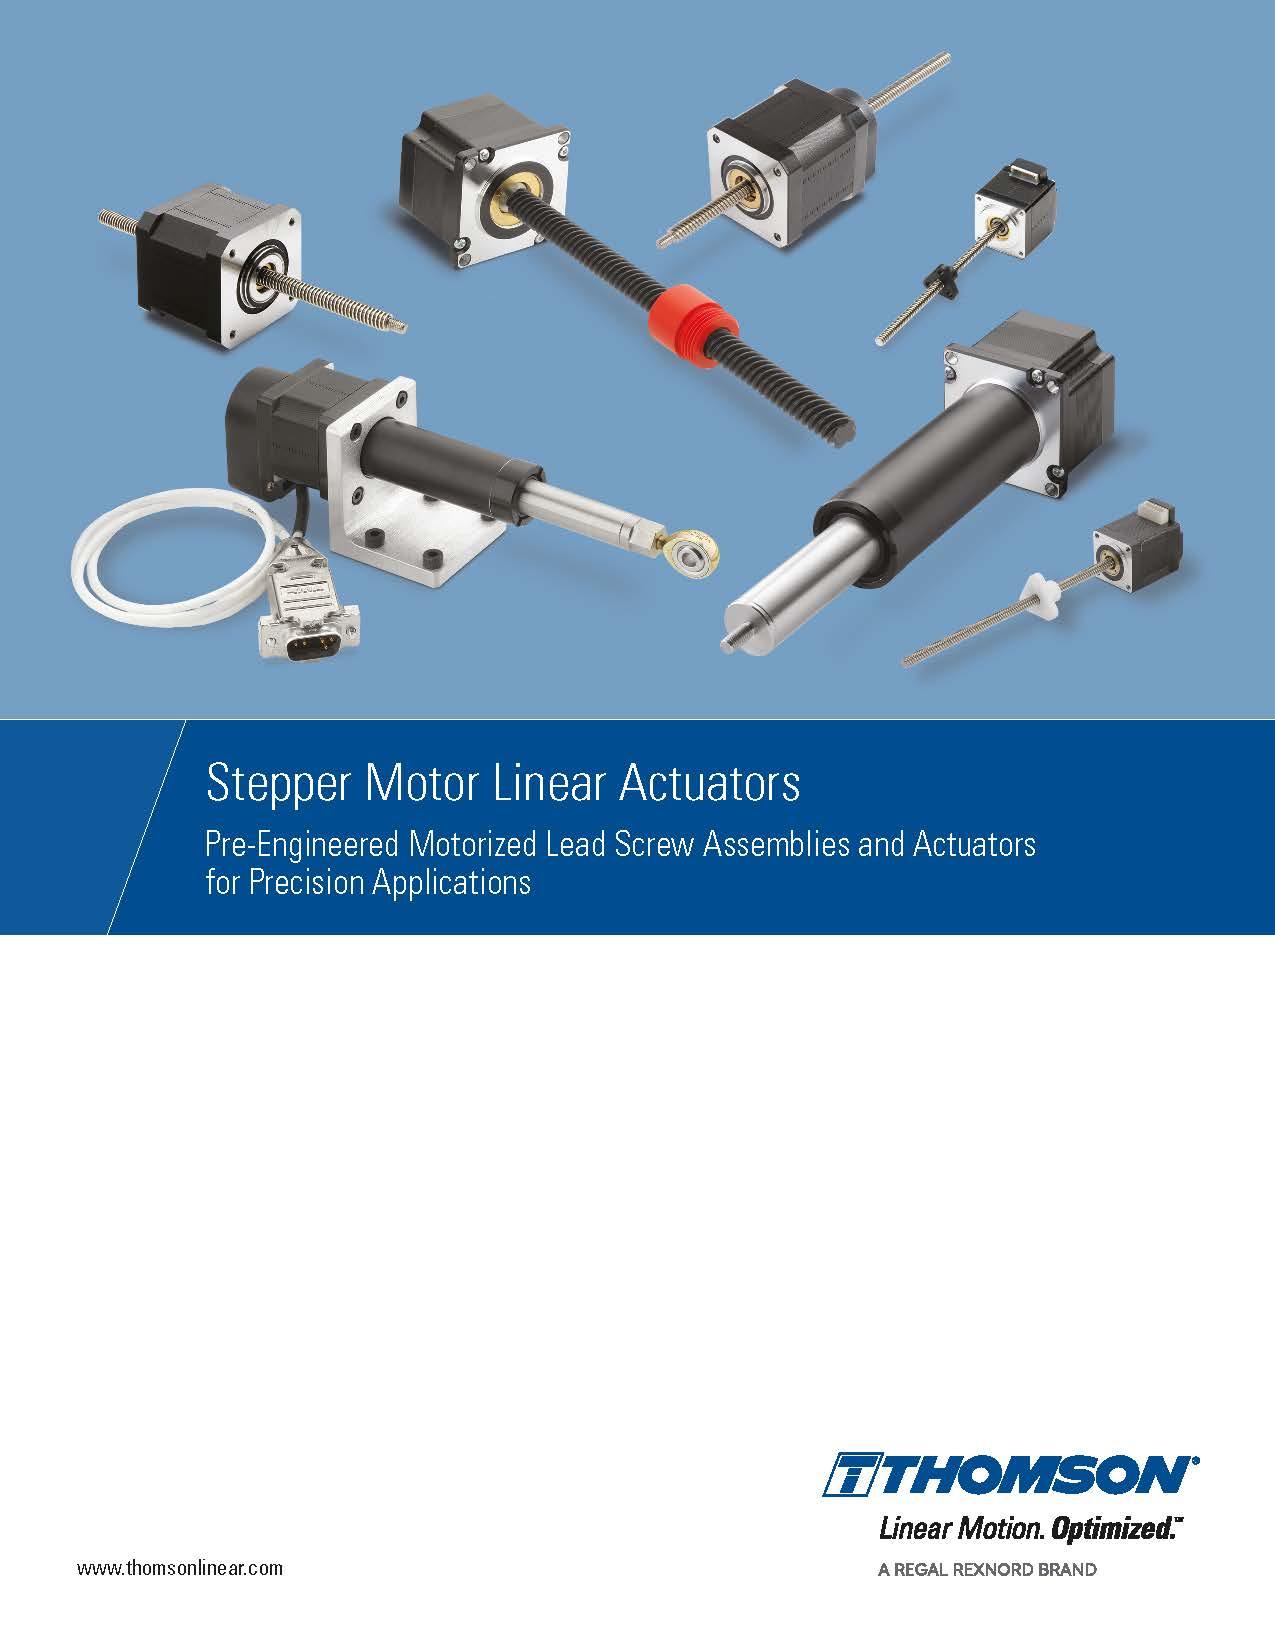 Thomson Stepper Motor Linear Actuators ENG